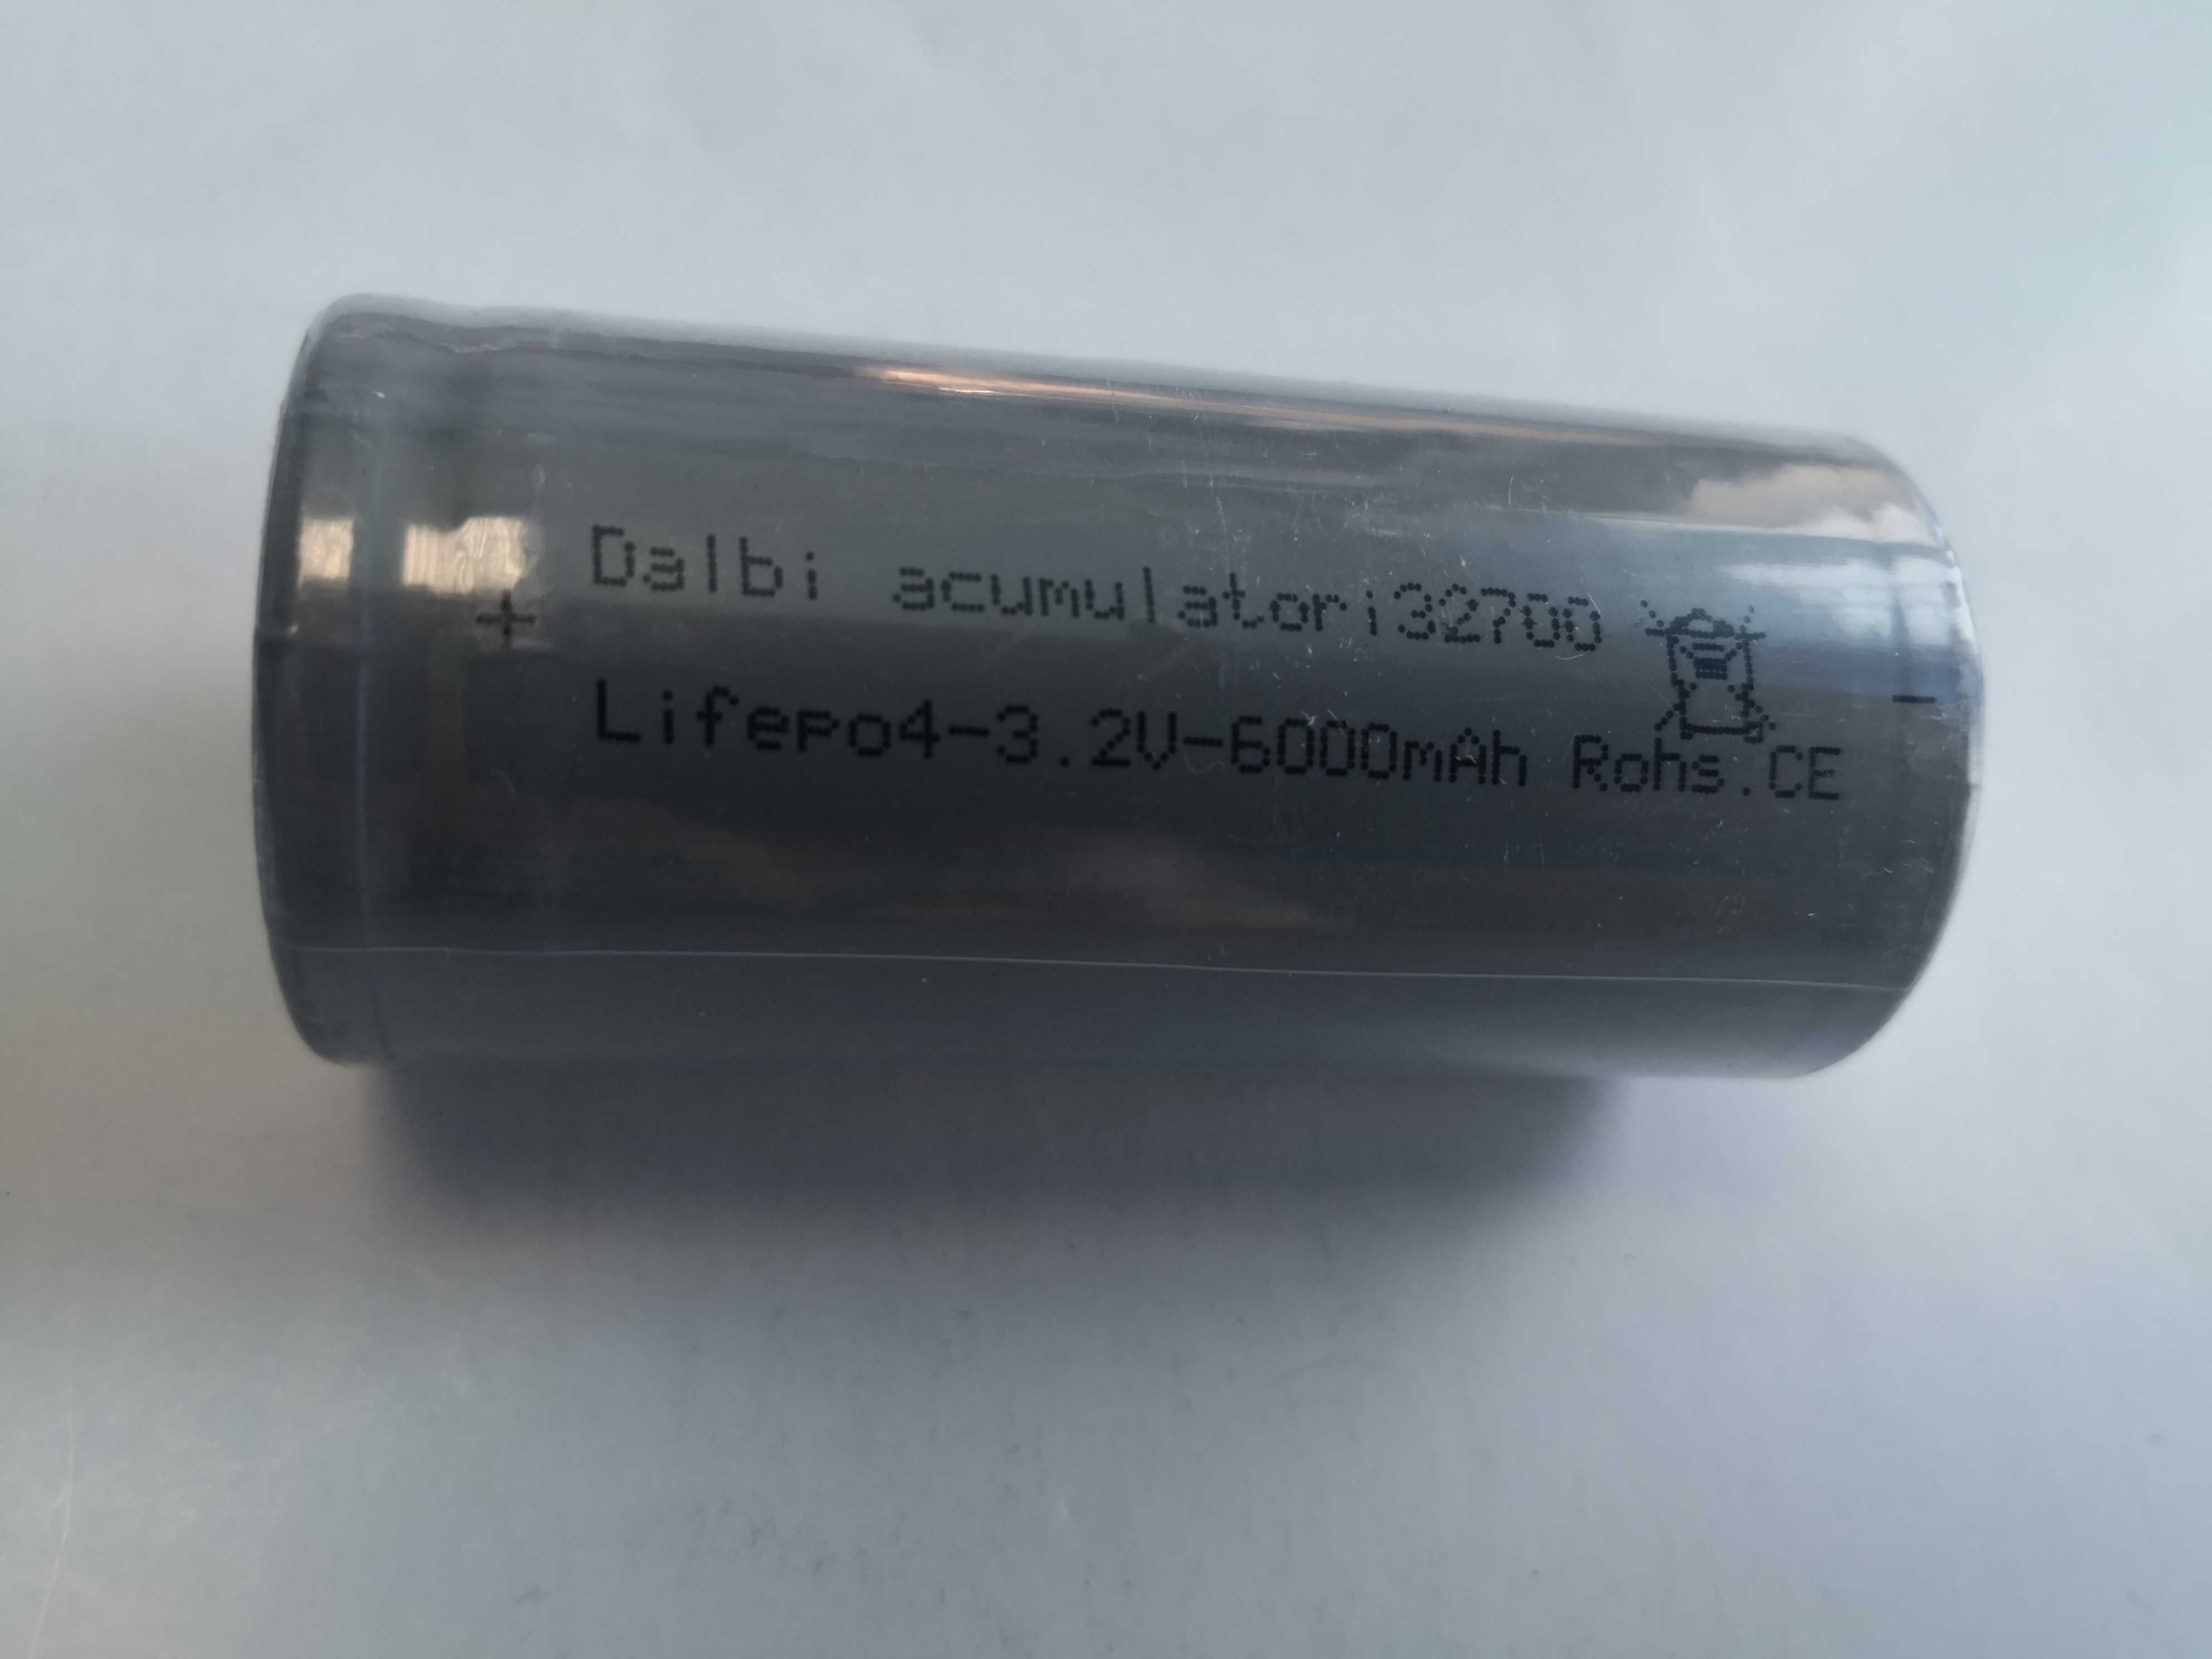 Acumulatori Lifepo4 - 3,2V pt. lampi solare